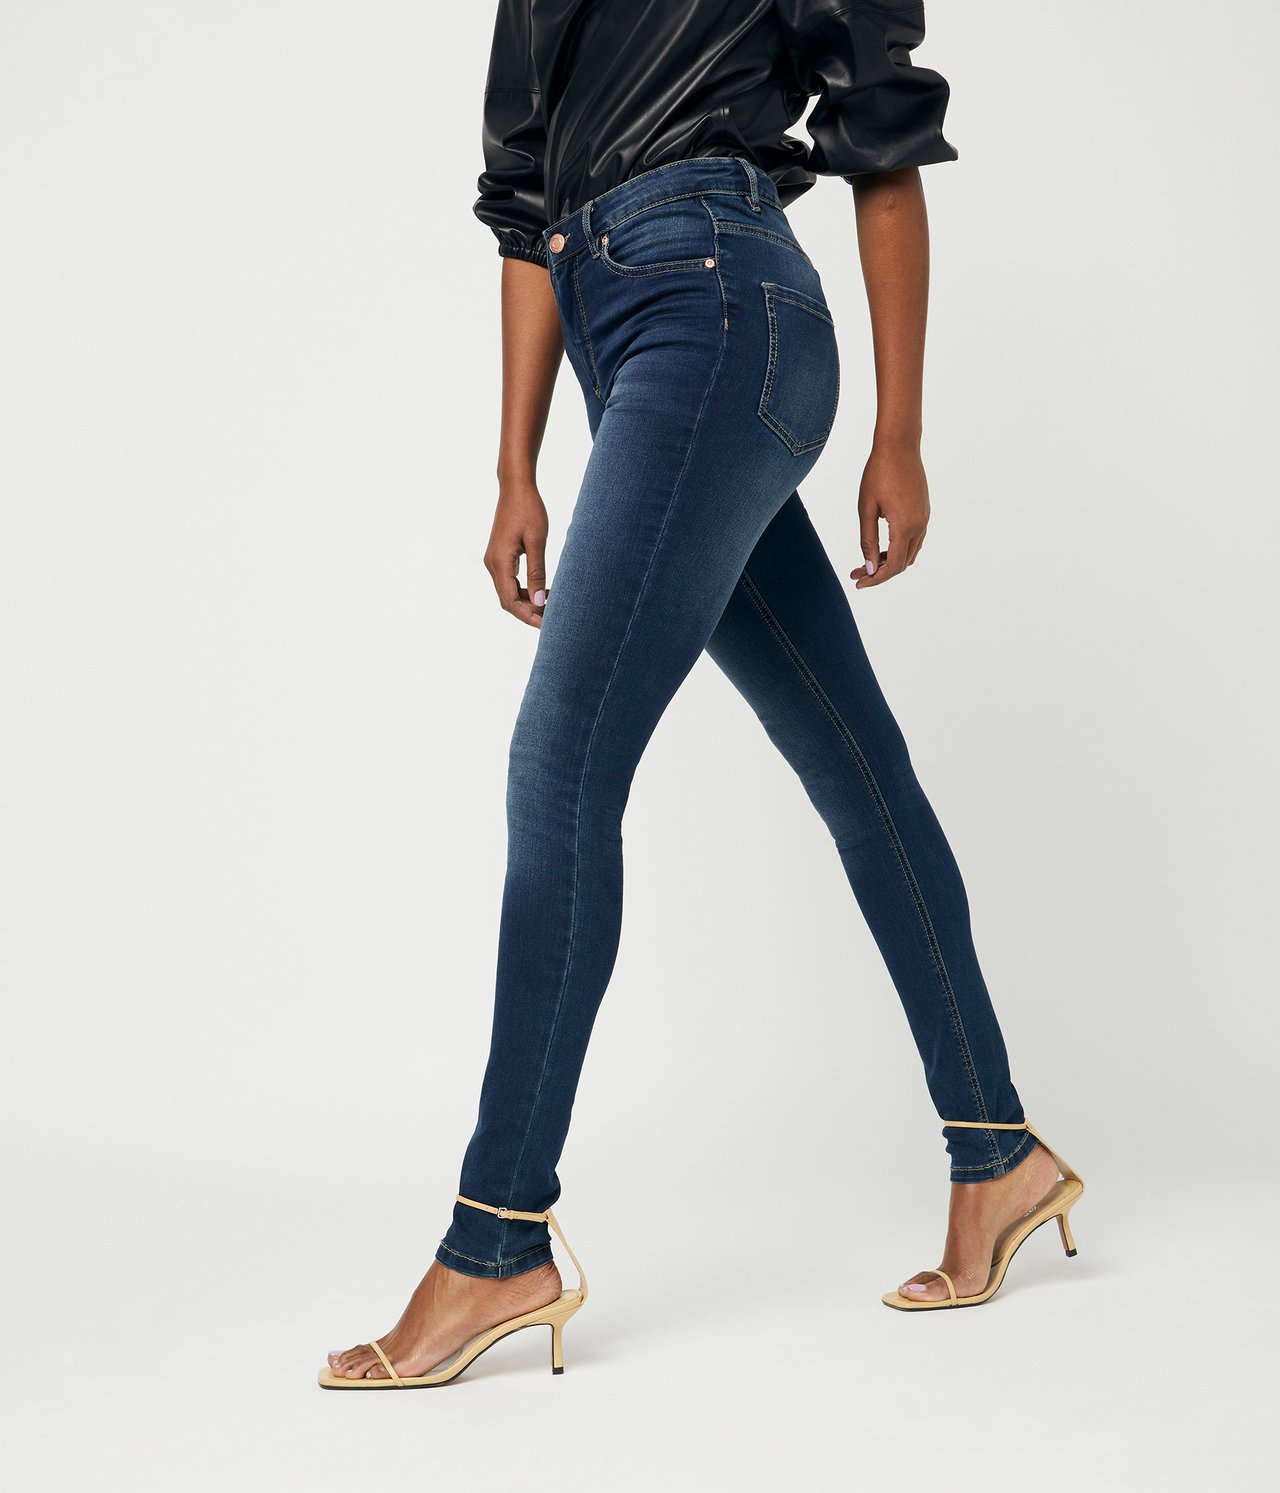 Super slim jeans extra long leg - Mörk denim - 3